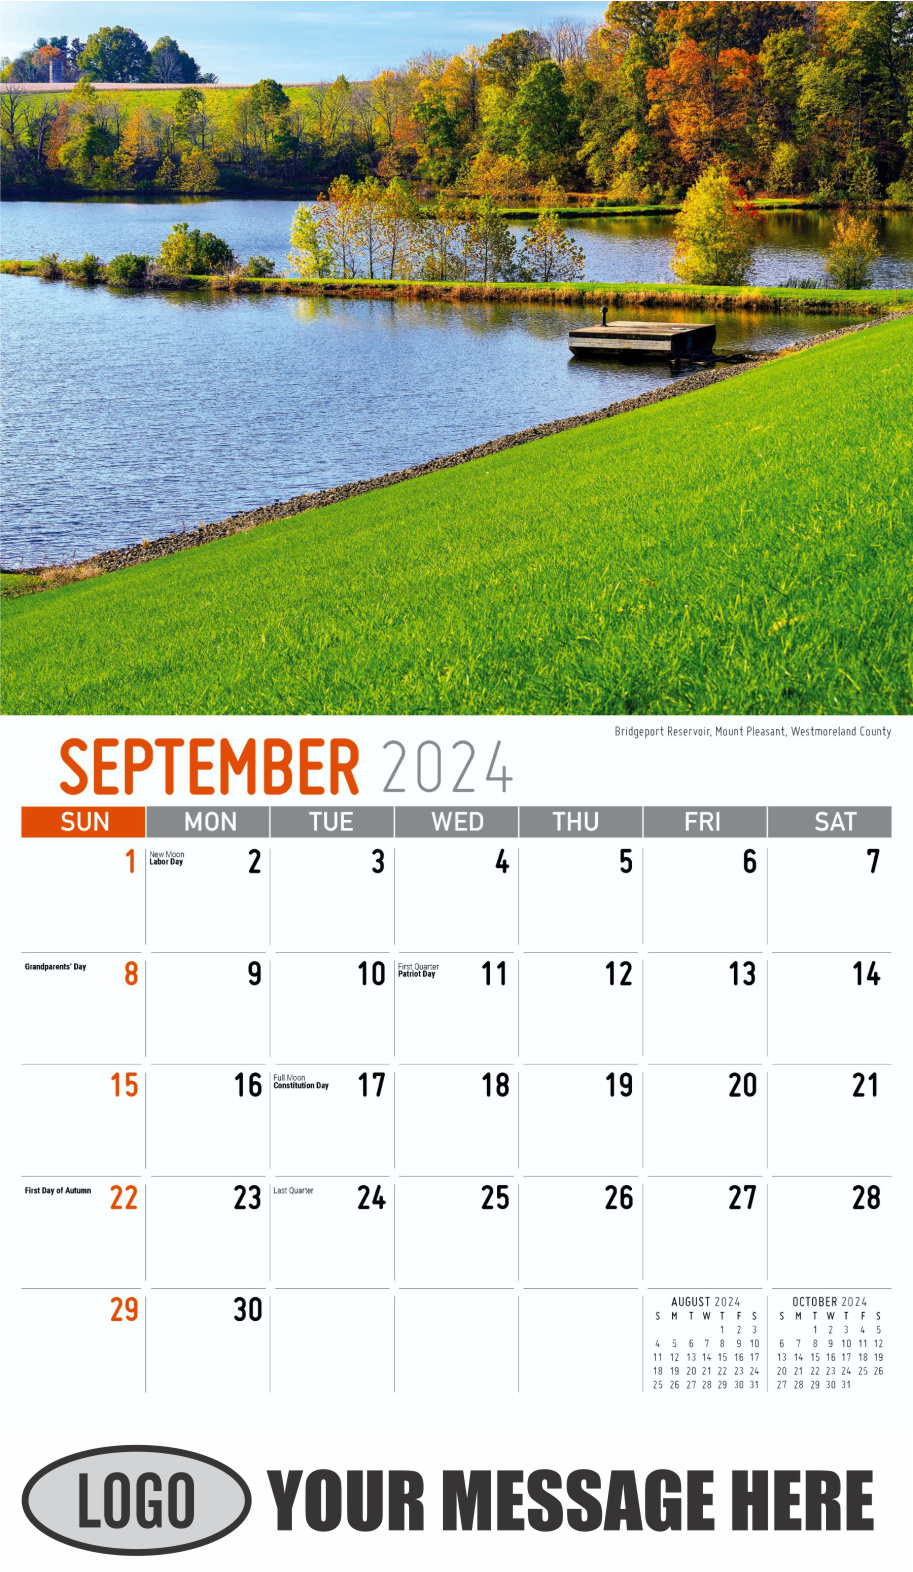 Scenes of Pennsylvania 2024 Business Promotion Calendar - September